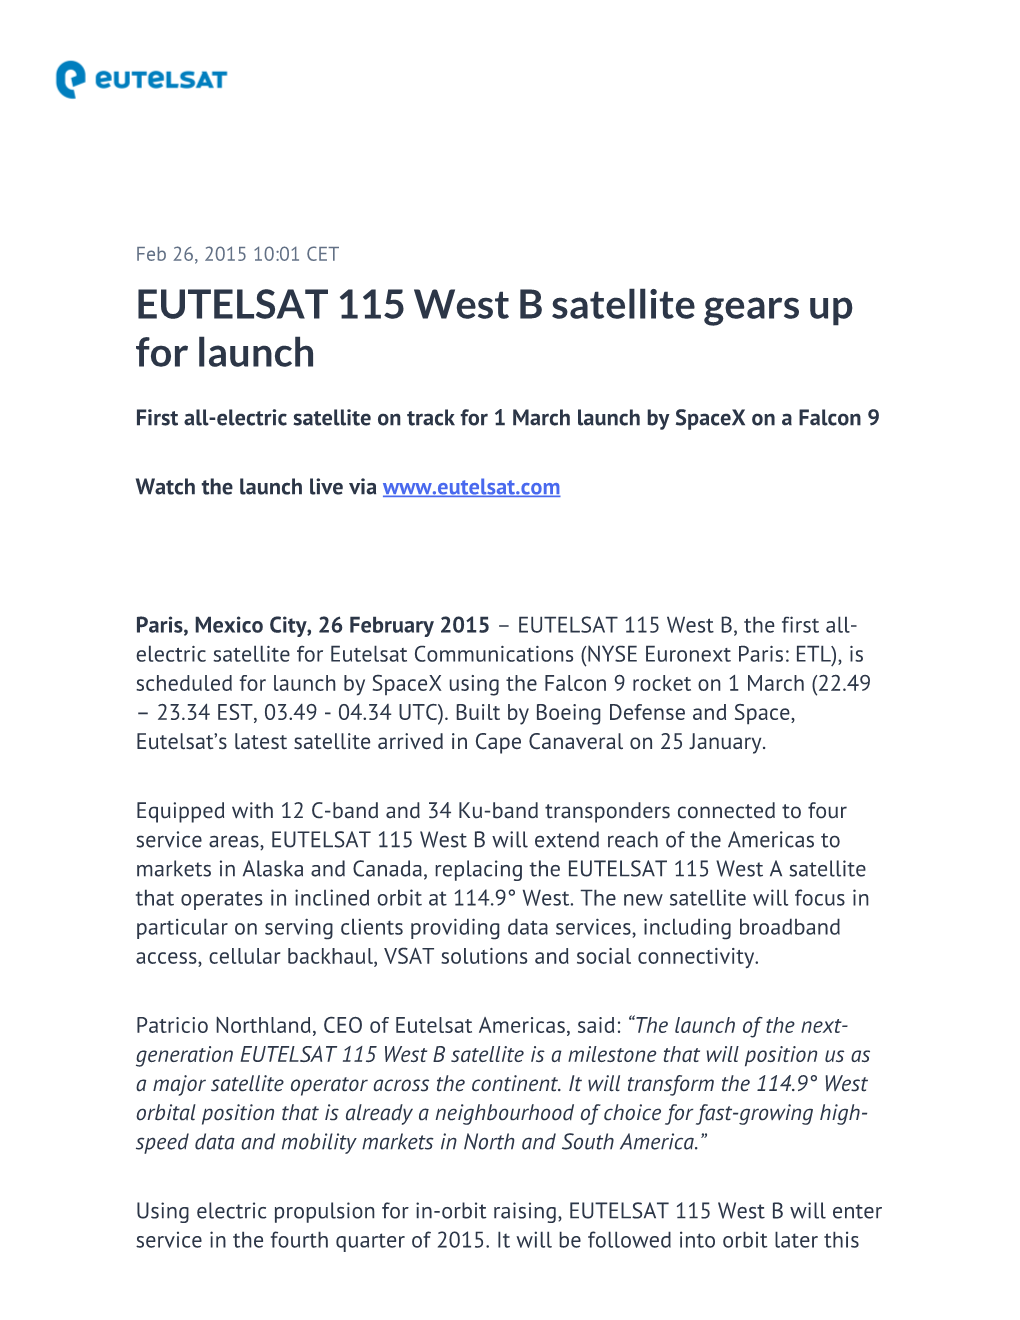 EUTELSAT 115 West B Satellite Gears up for Launch